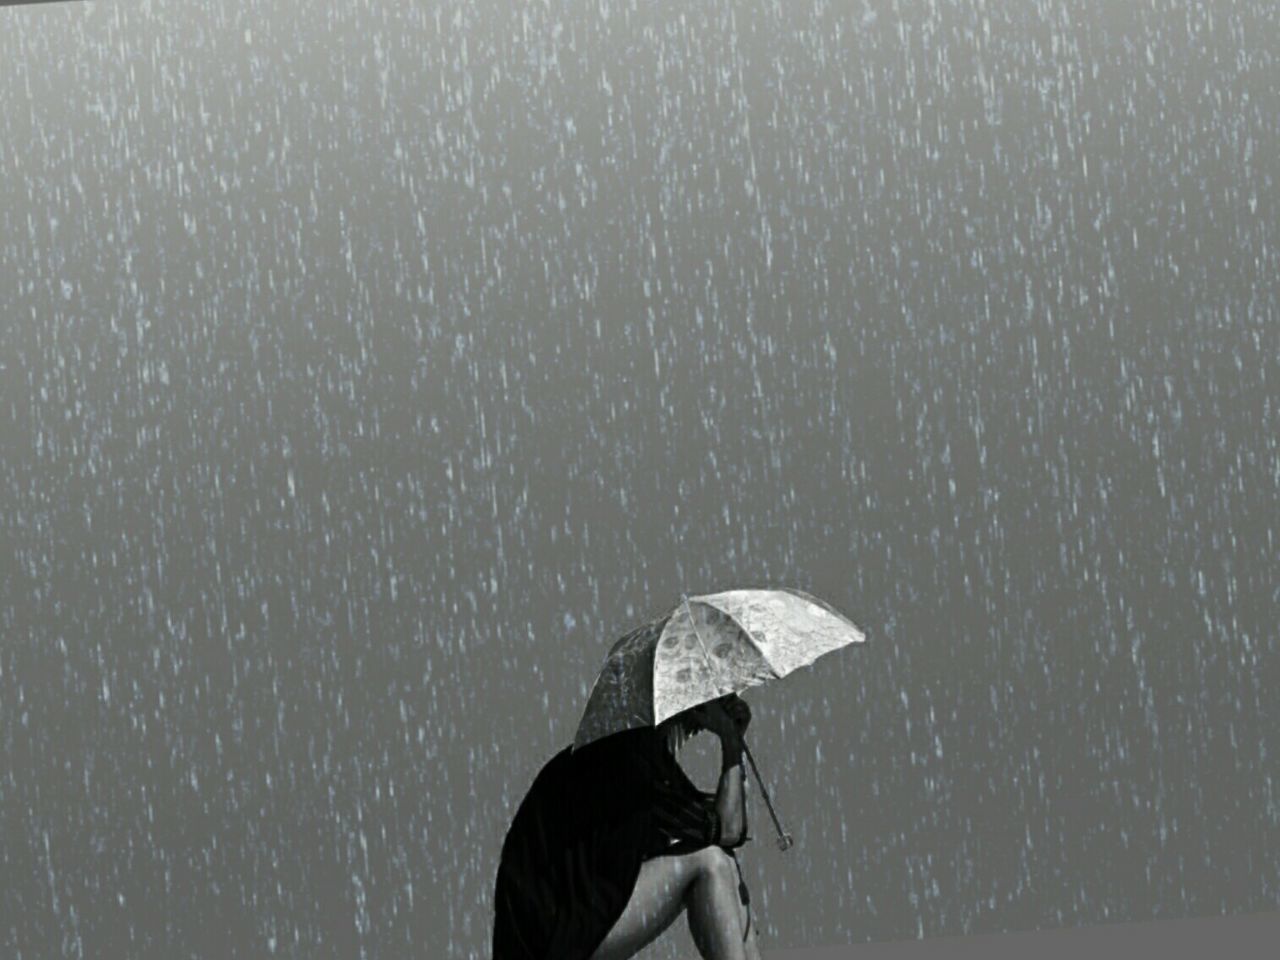 Woman with umbrella sitting outdoors during rainy season